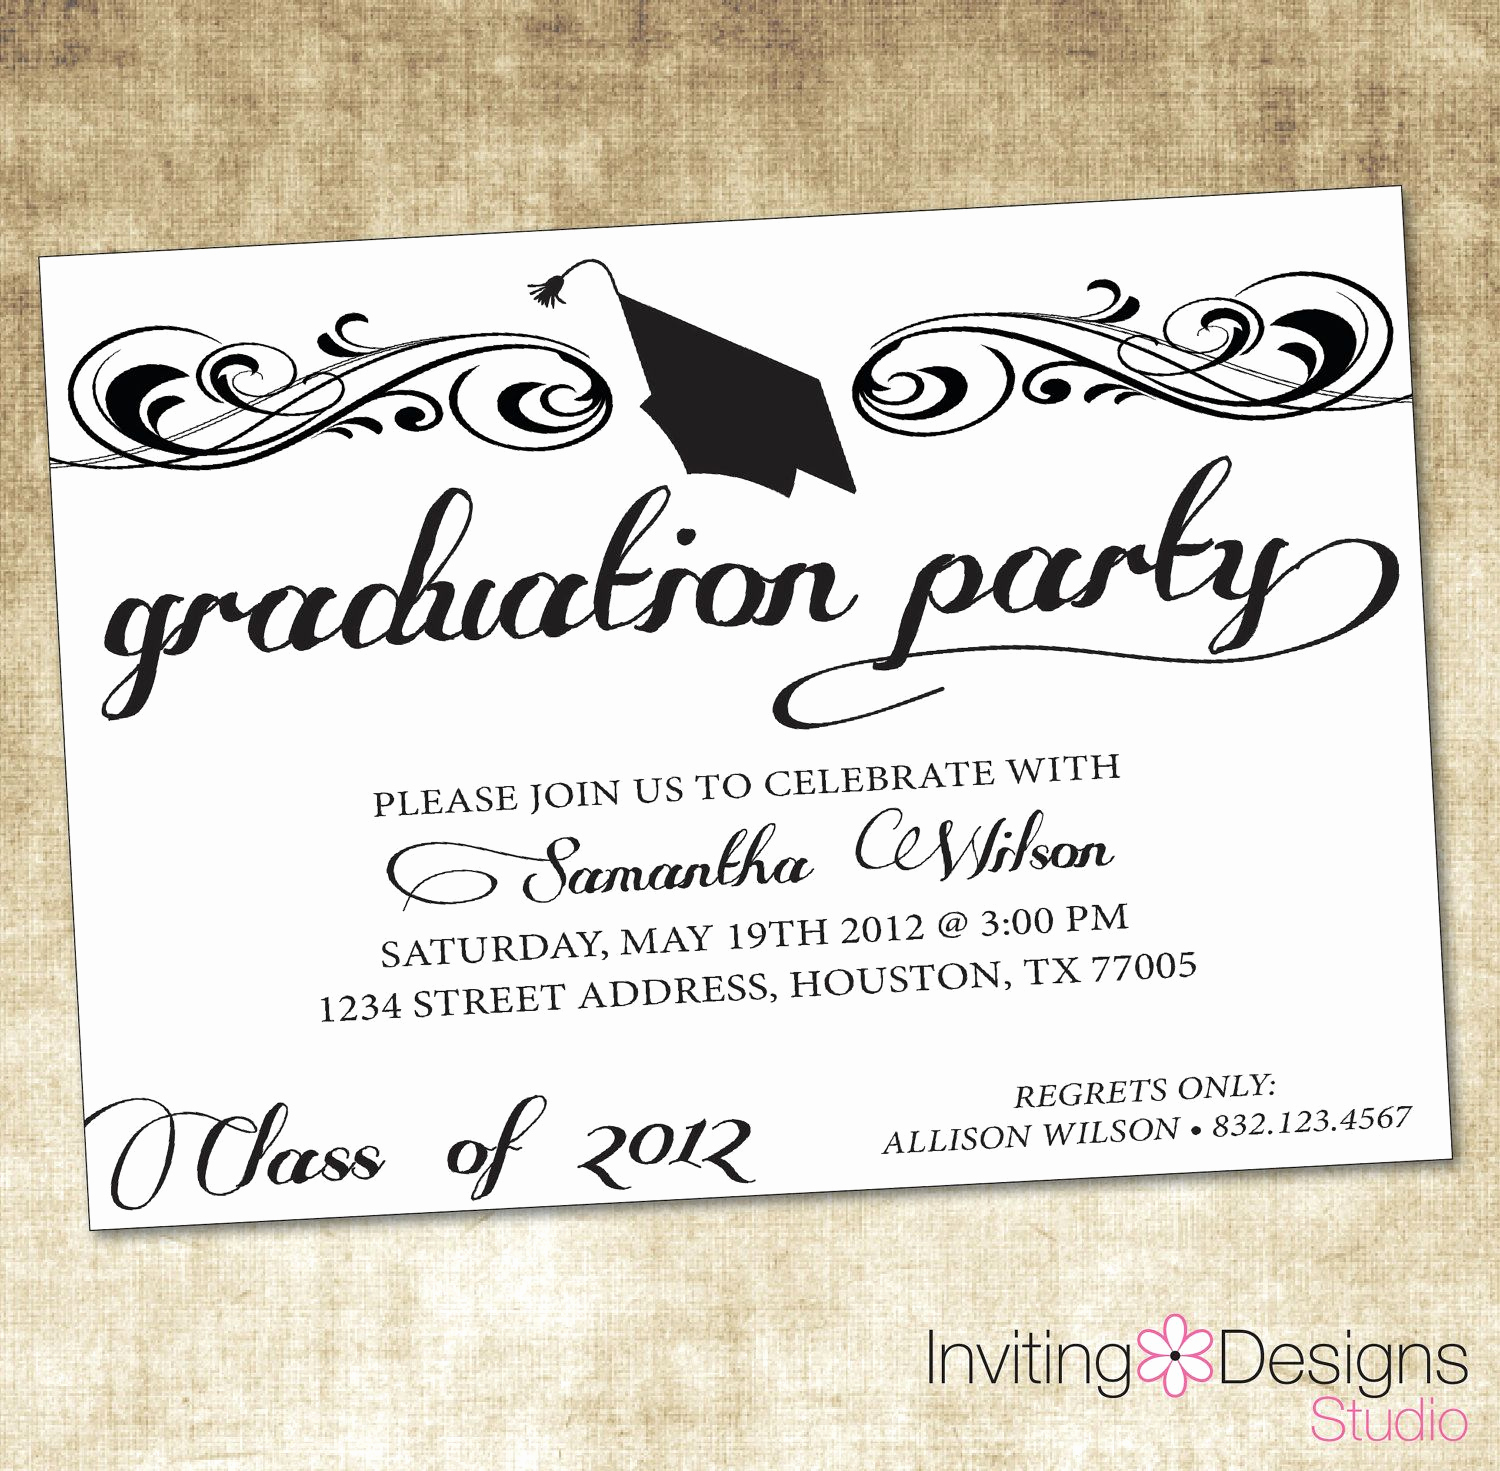 Phd Graduation Party Invitation Wording Luxury Image Result for Graduation Party Invitation Wording Ideas